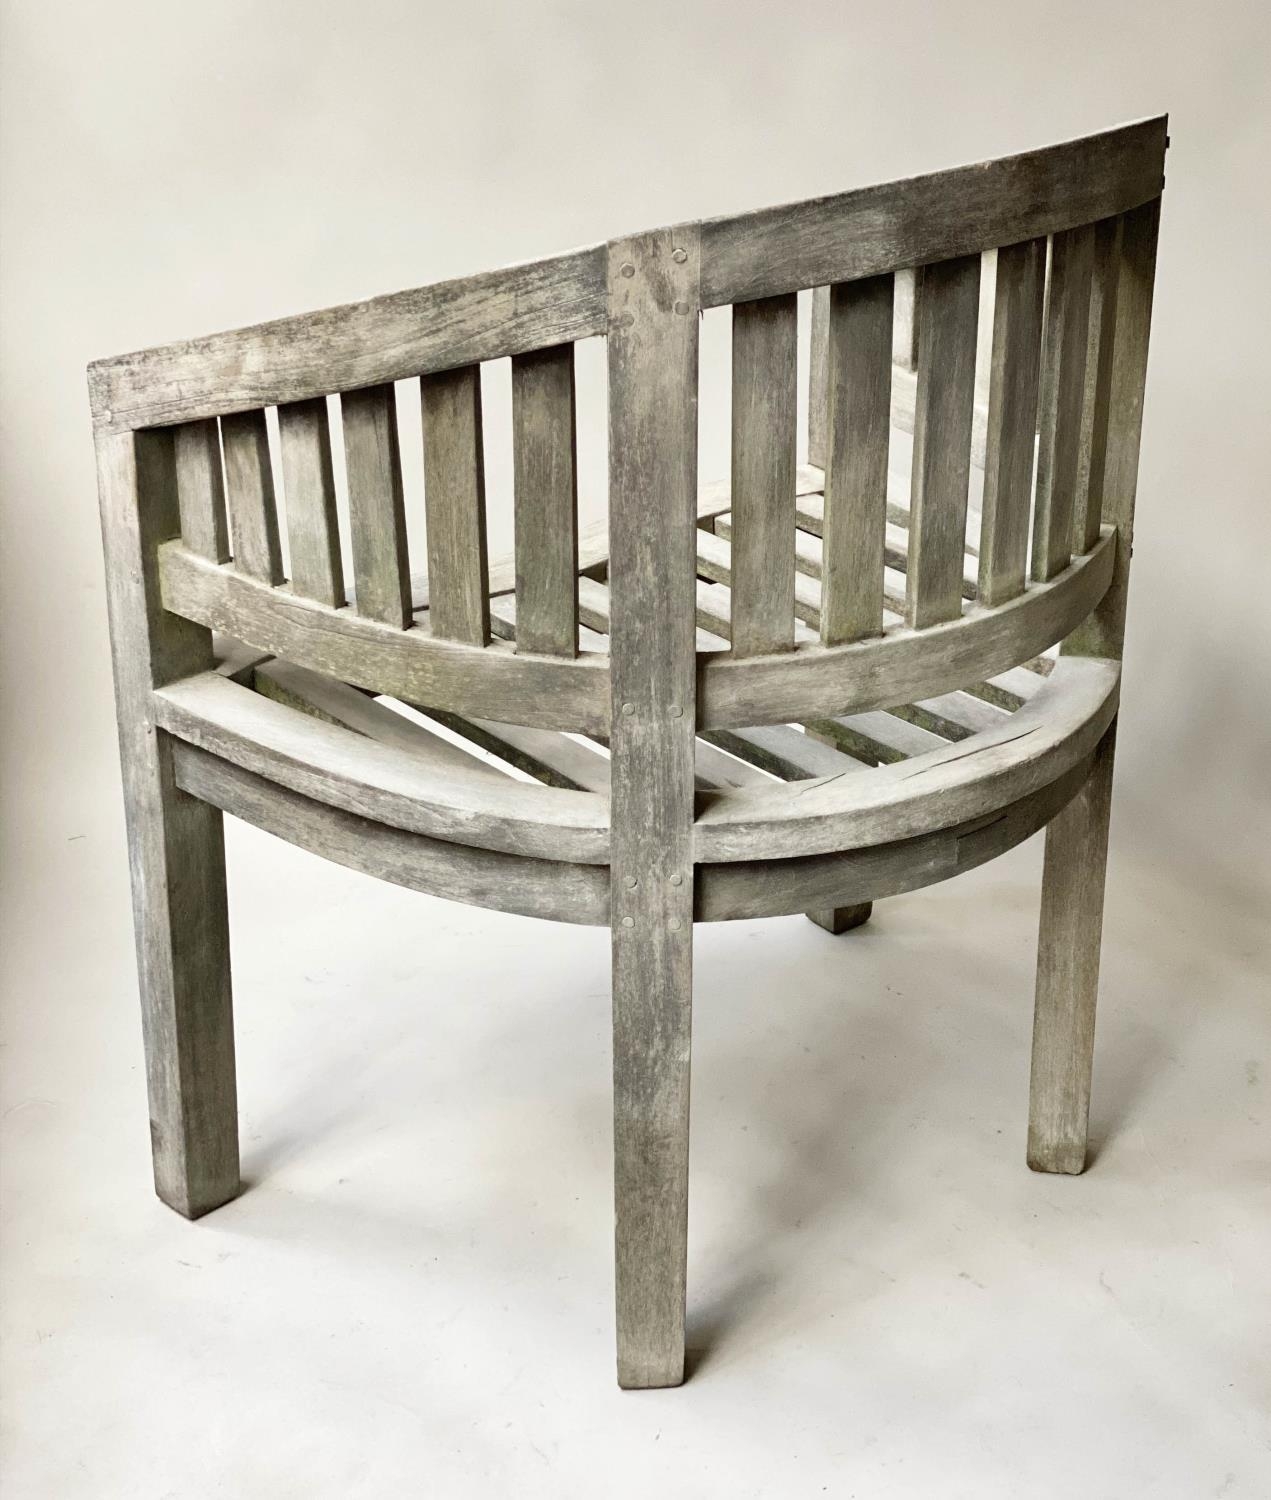 GARDEN TABLE, circular slatted weathered teak together with a Java teak garden armchair, 80cm diam x - Image 3 of 9